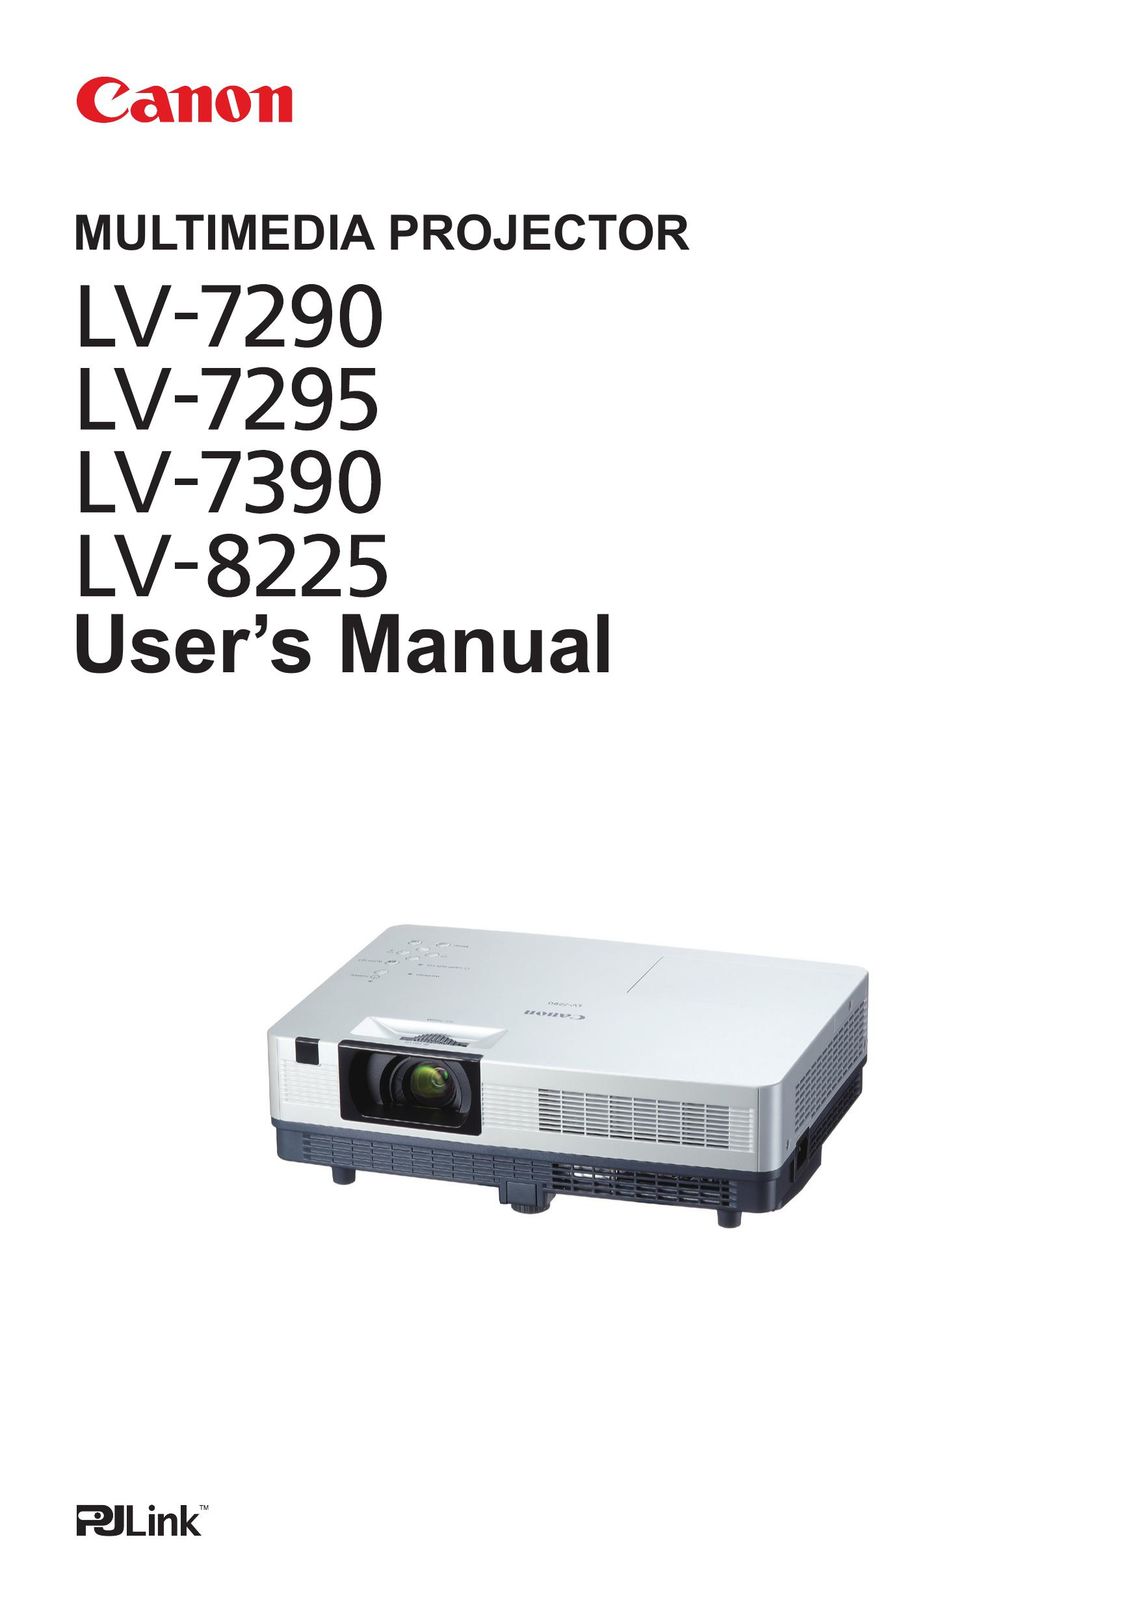 Canon LV-7295 Projector User Manual